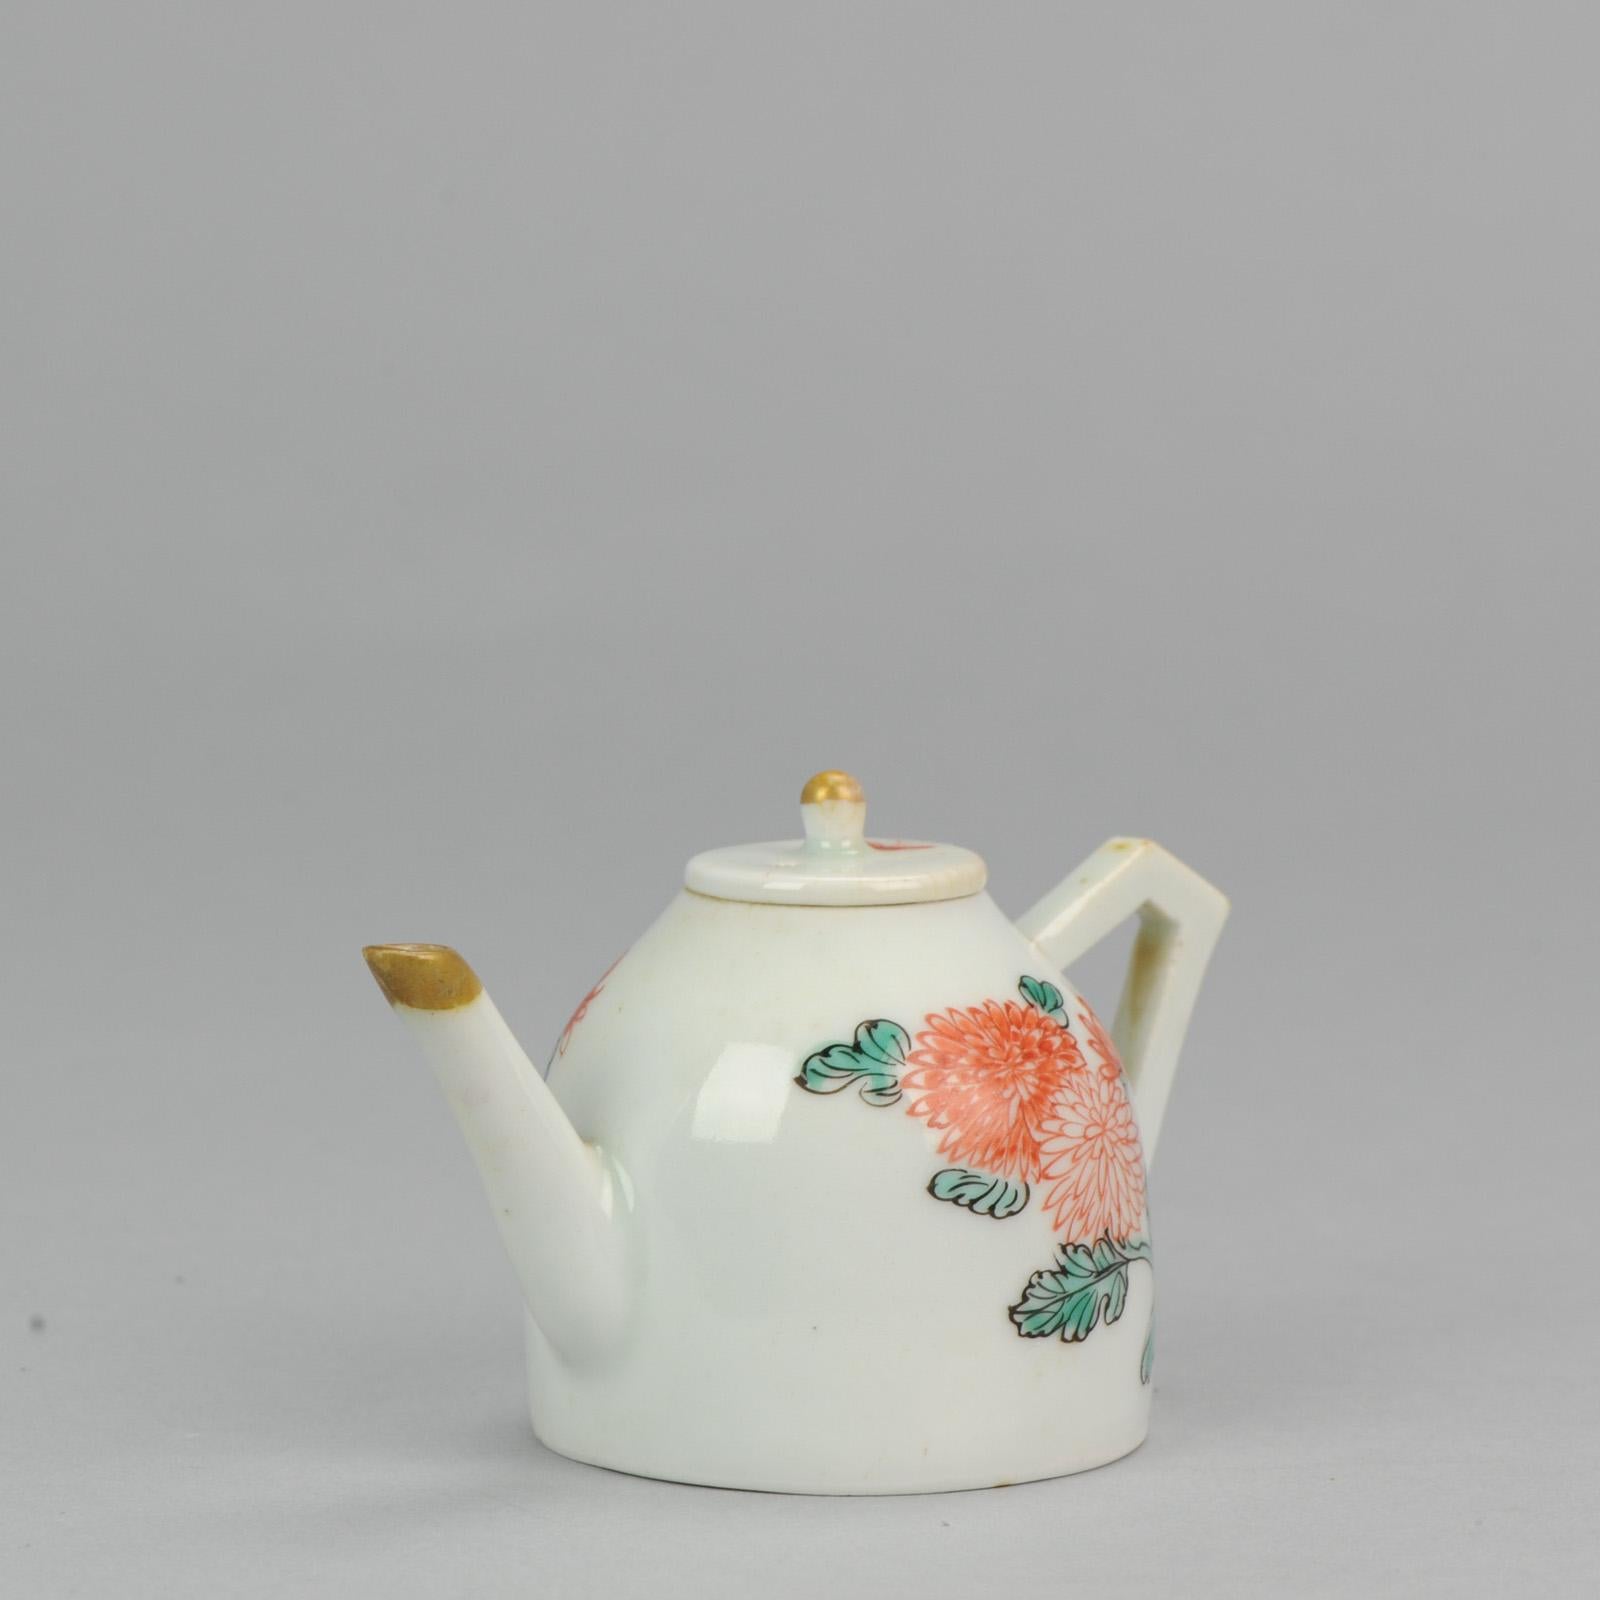 Edo Miniature Rare Japanese Porcelain Teapot Arita Japan Chrysant, circa 1700 For Sale